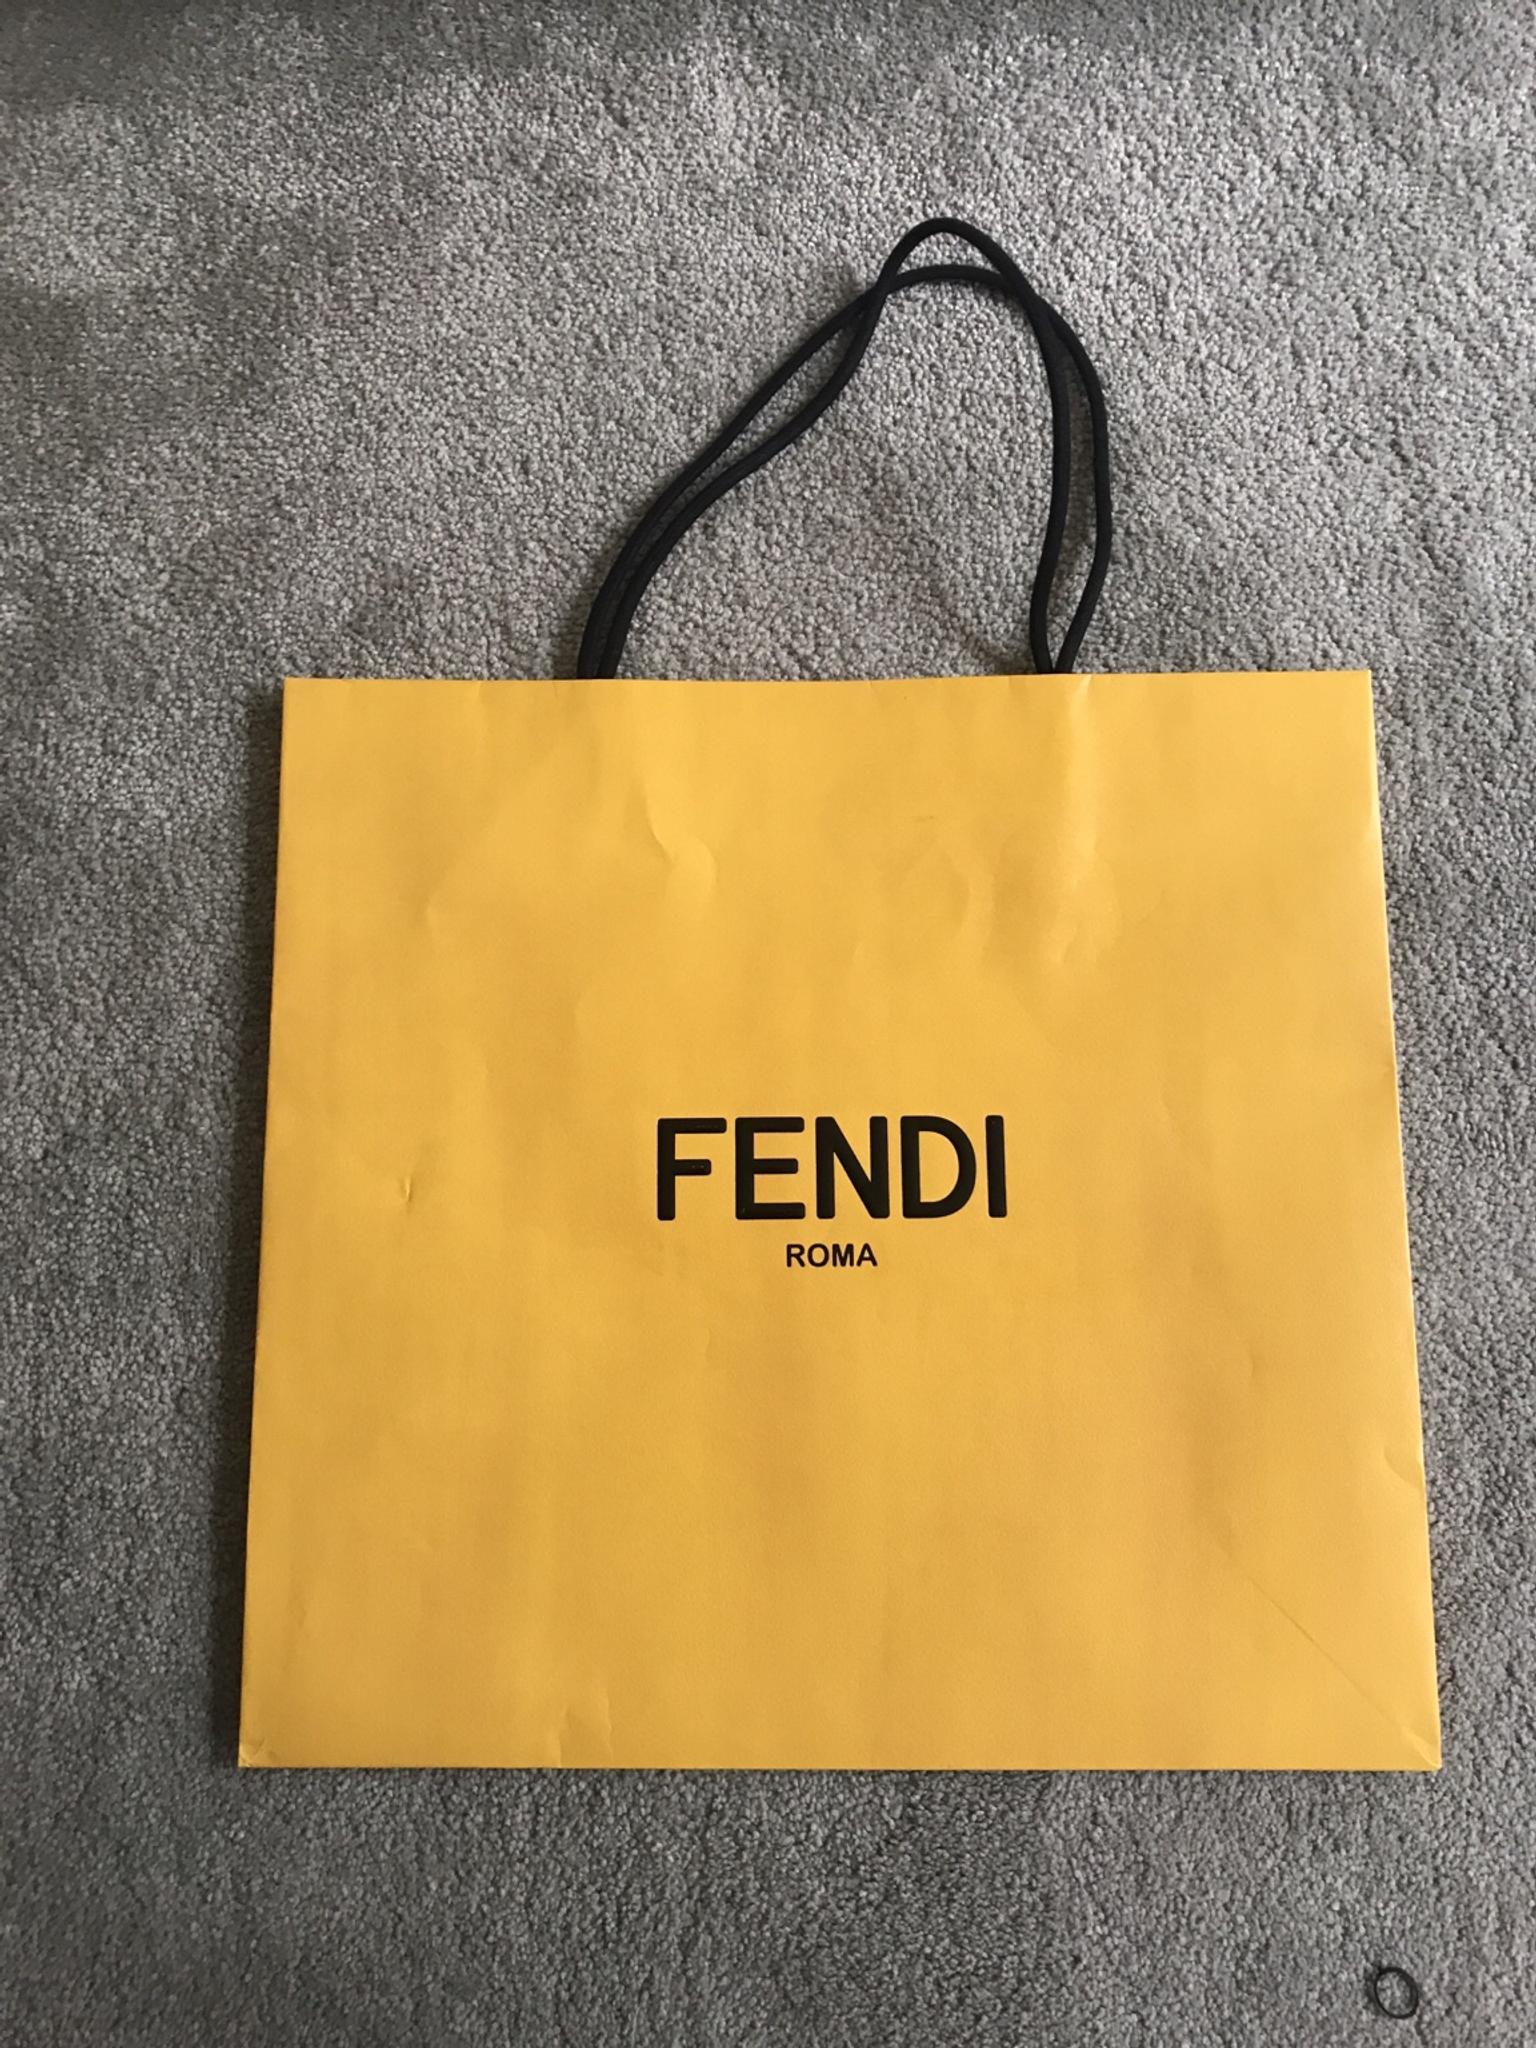 fendi paper shopping bag